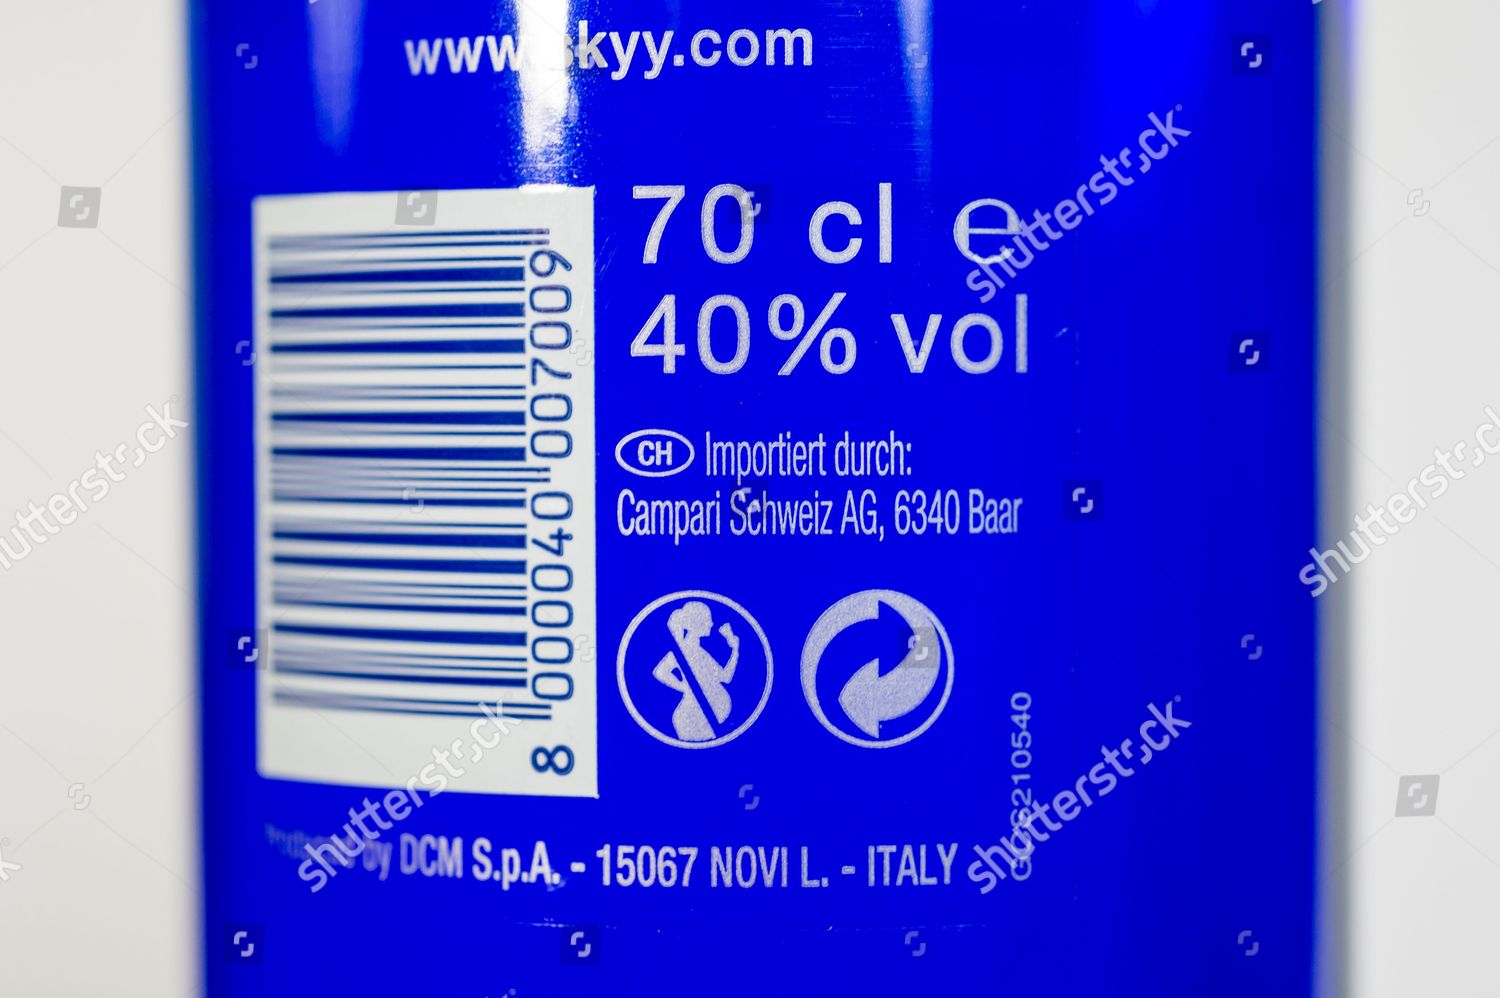 Bottle Skyy Vodka Showing 40 Shutterstock Stock Stock Photo | - Volume Image Editorial